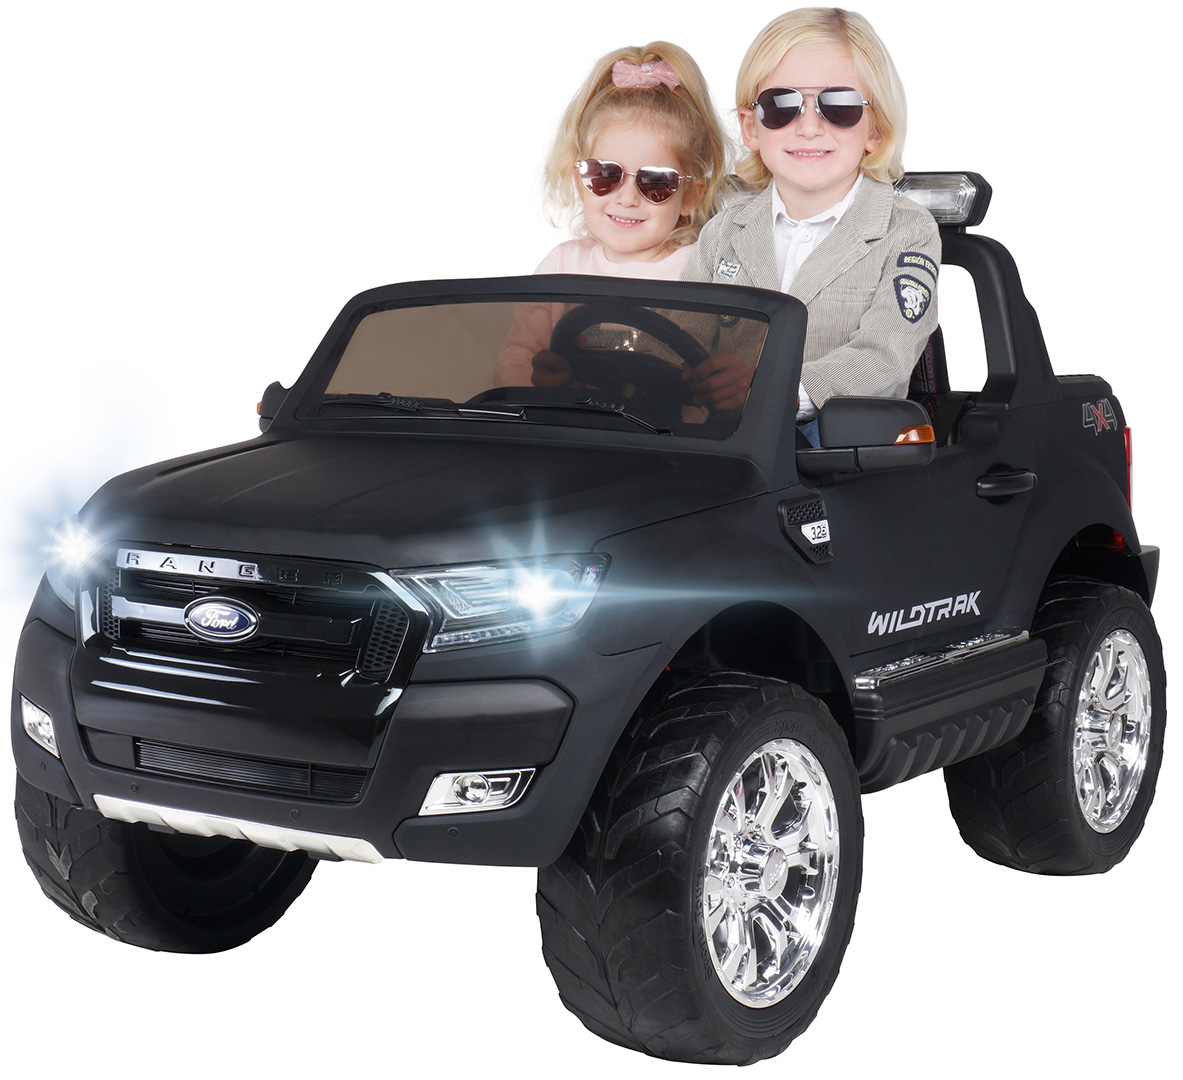 Kinder Elektroauto Ford Ranger Modell 2018 Allrad Lizenziert Fur 2 Personen